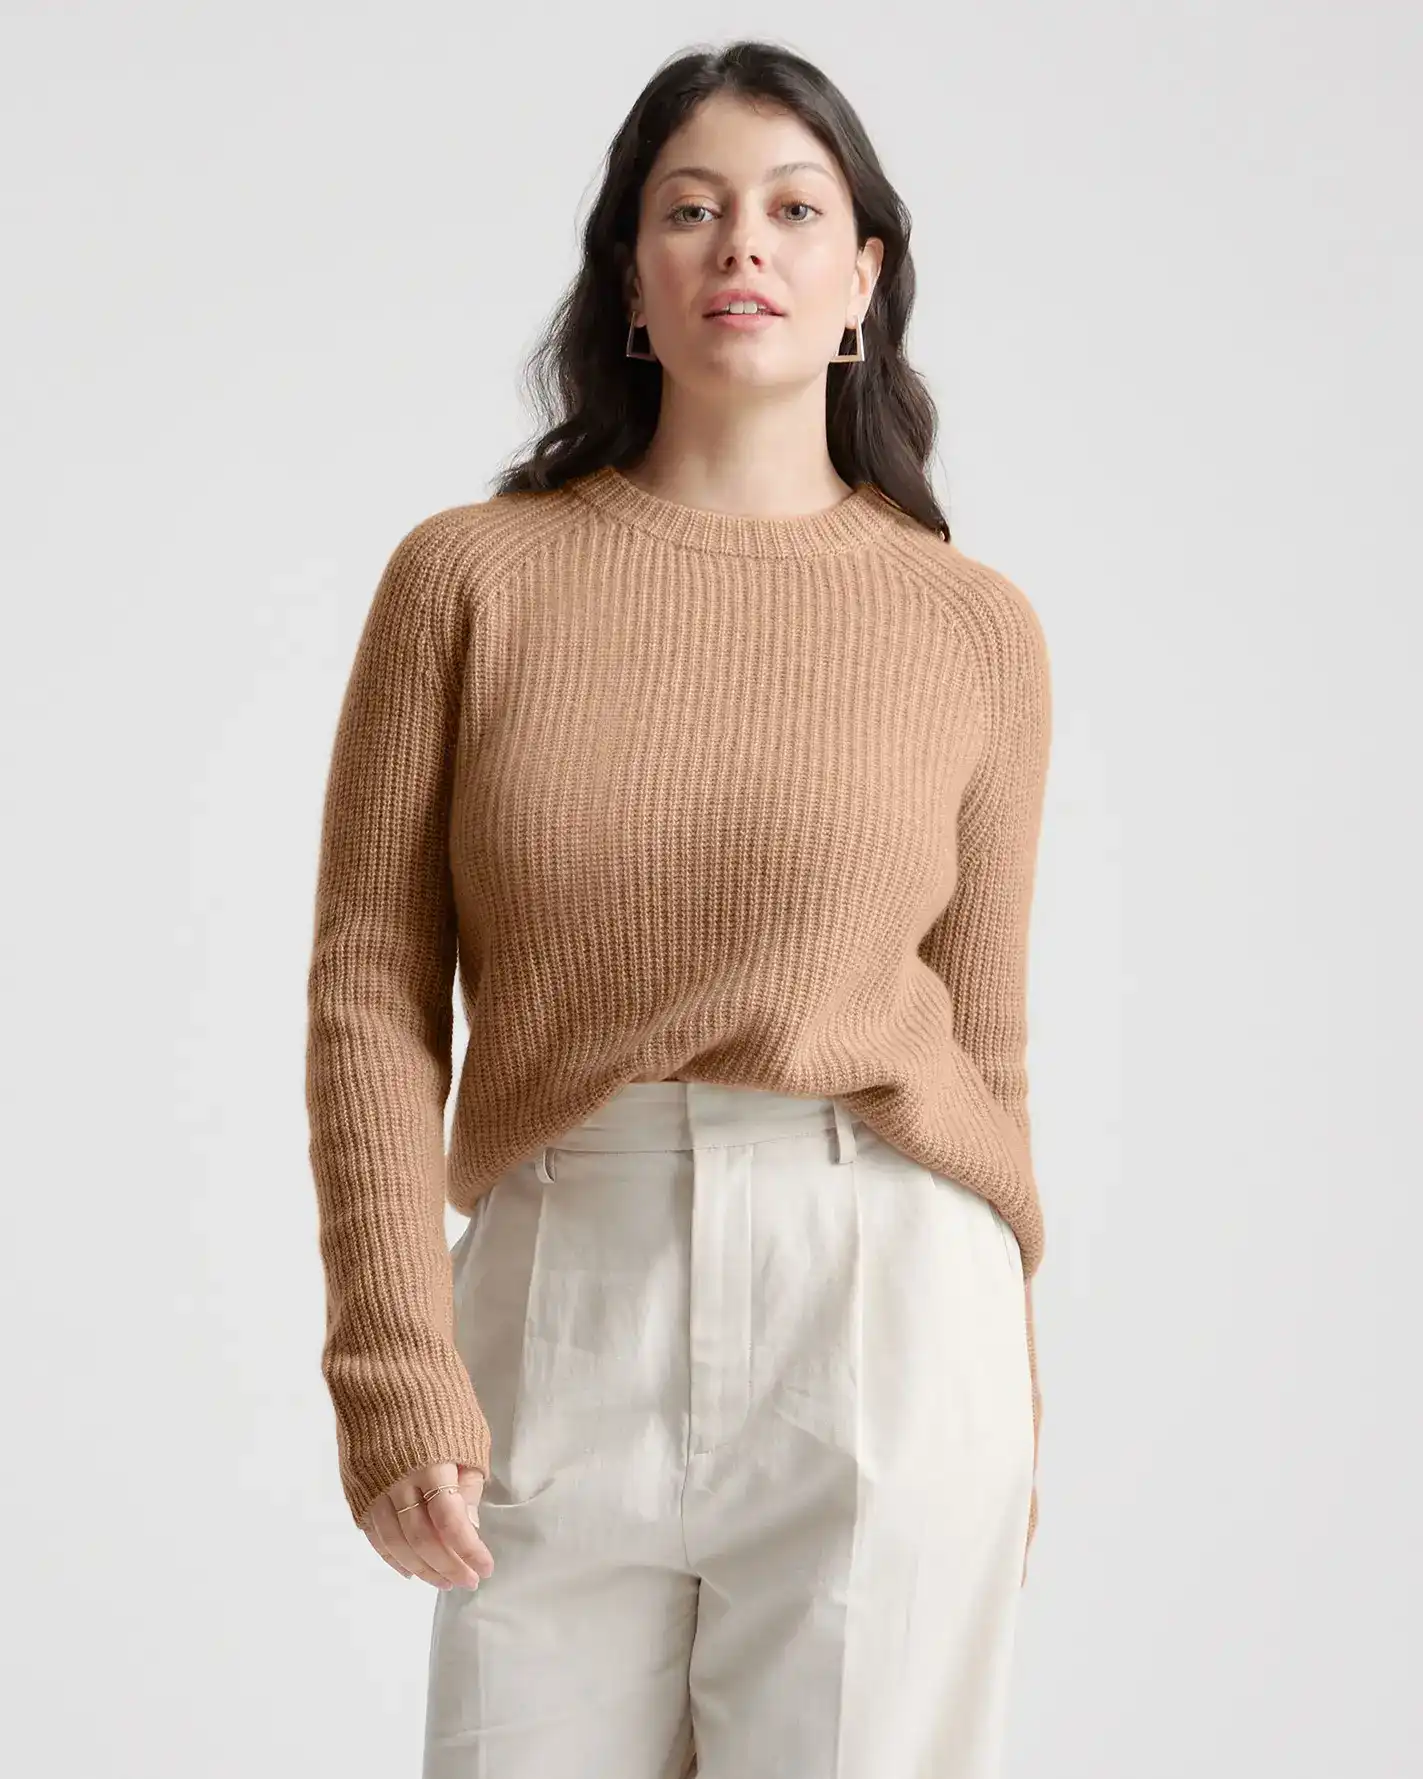 caramel knit cashmere sweater on model